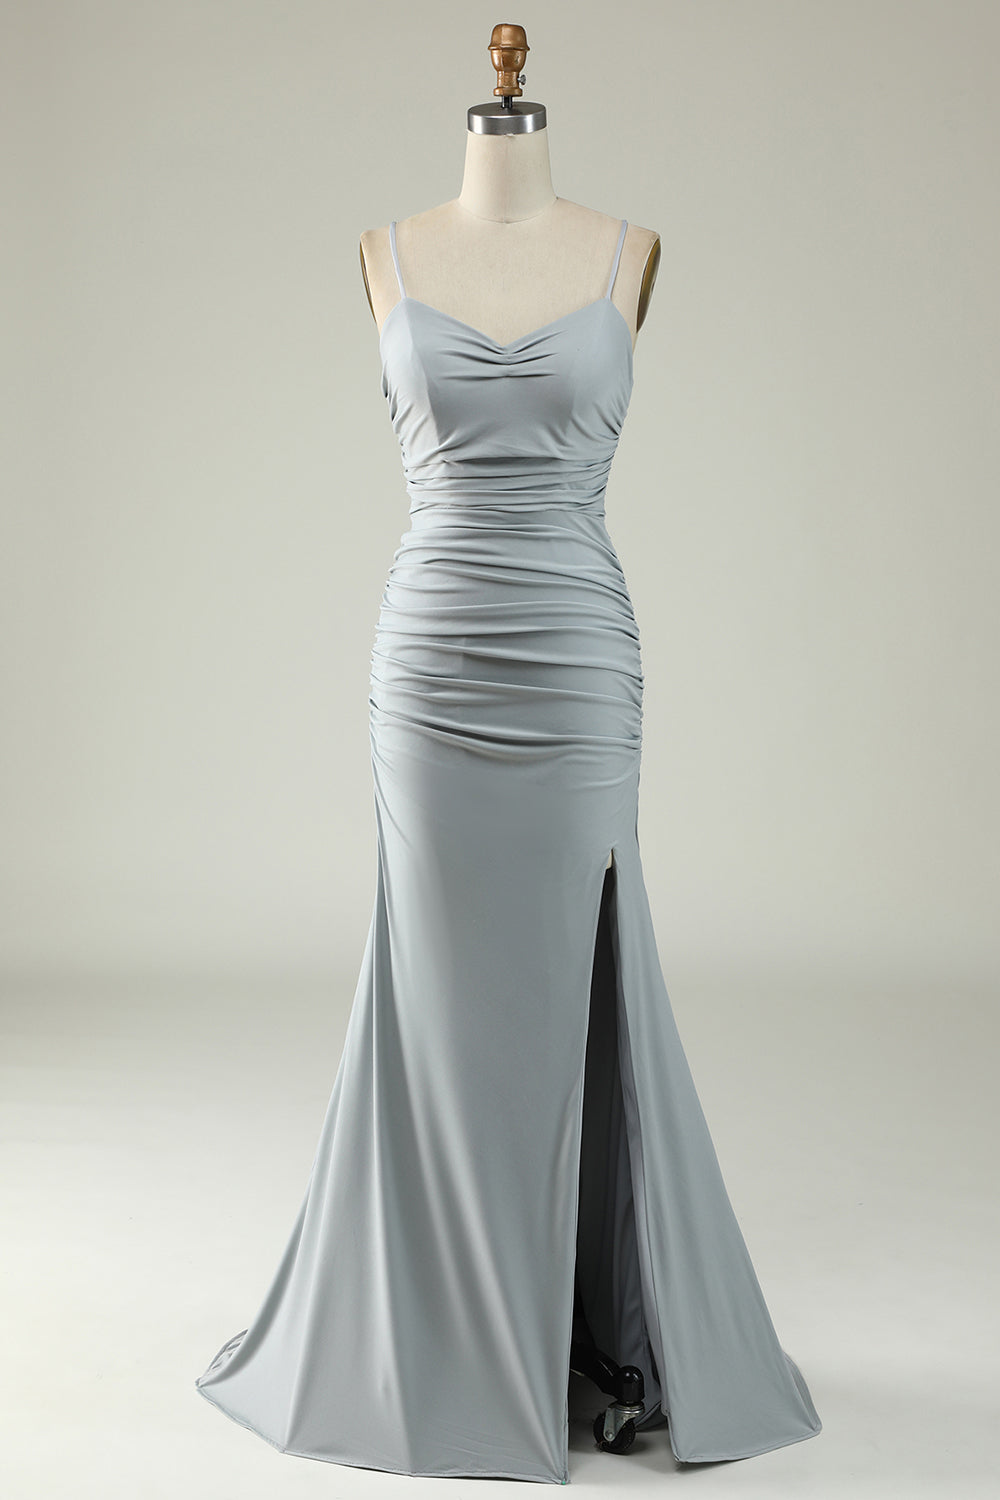 Grey Mermaid Spaghetti Straps Long Prom Dress with Criss Cross Back